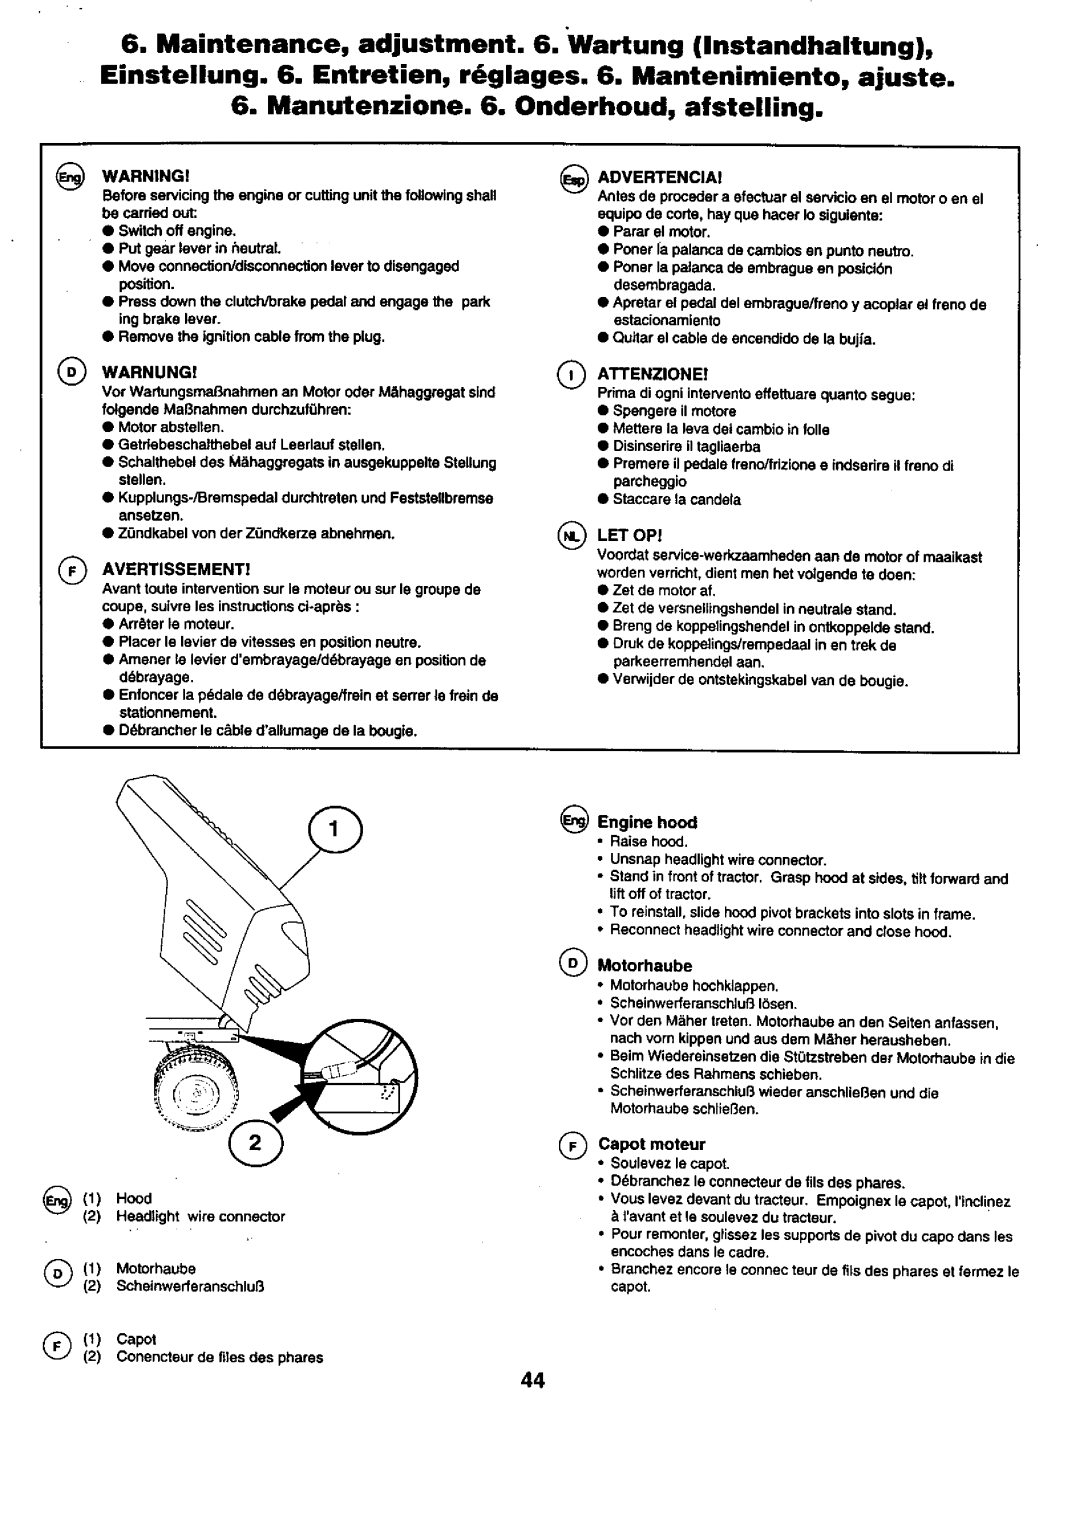 Craftsman 25949 instruction manual Manutenzione. 6. Onderhoud, afstelling 